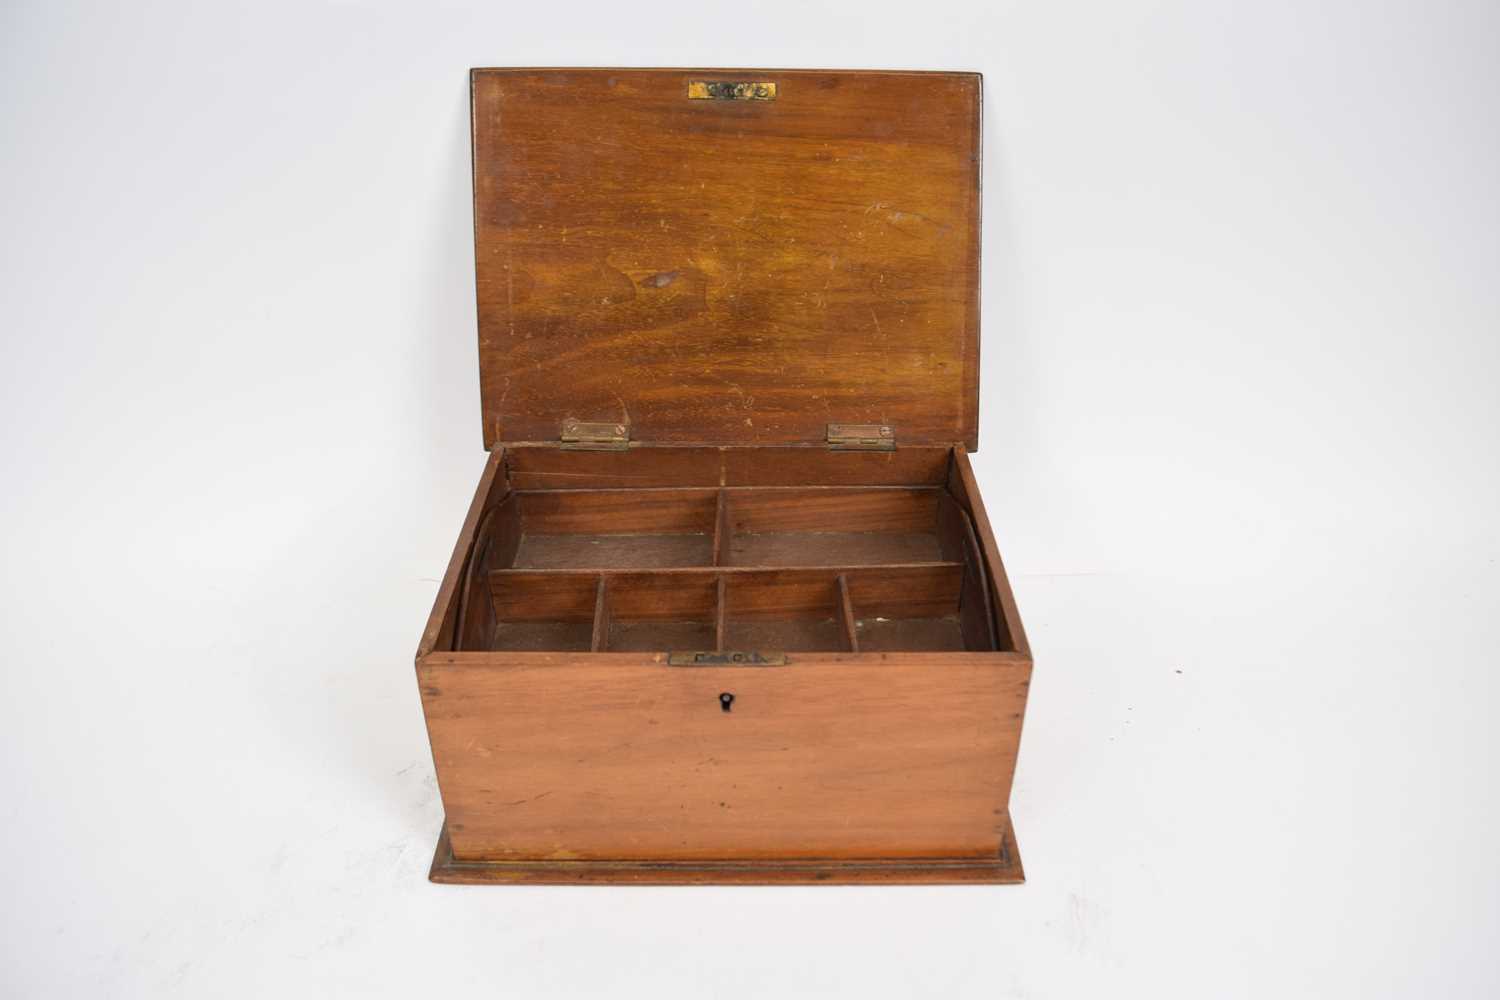 19th century mahogany jewellery box, 24cm long - Image 3 of 3